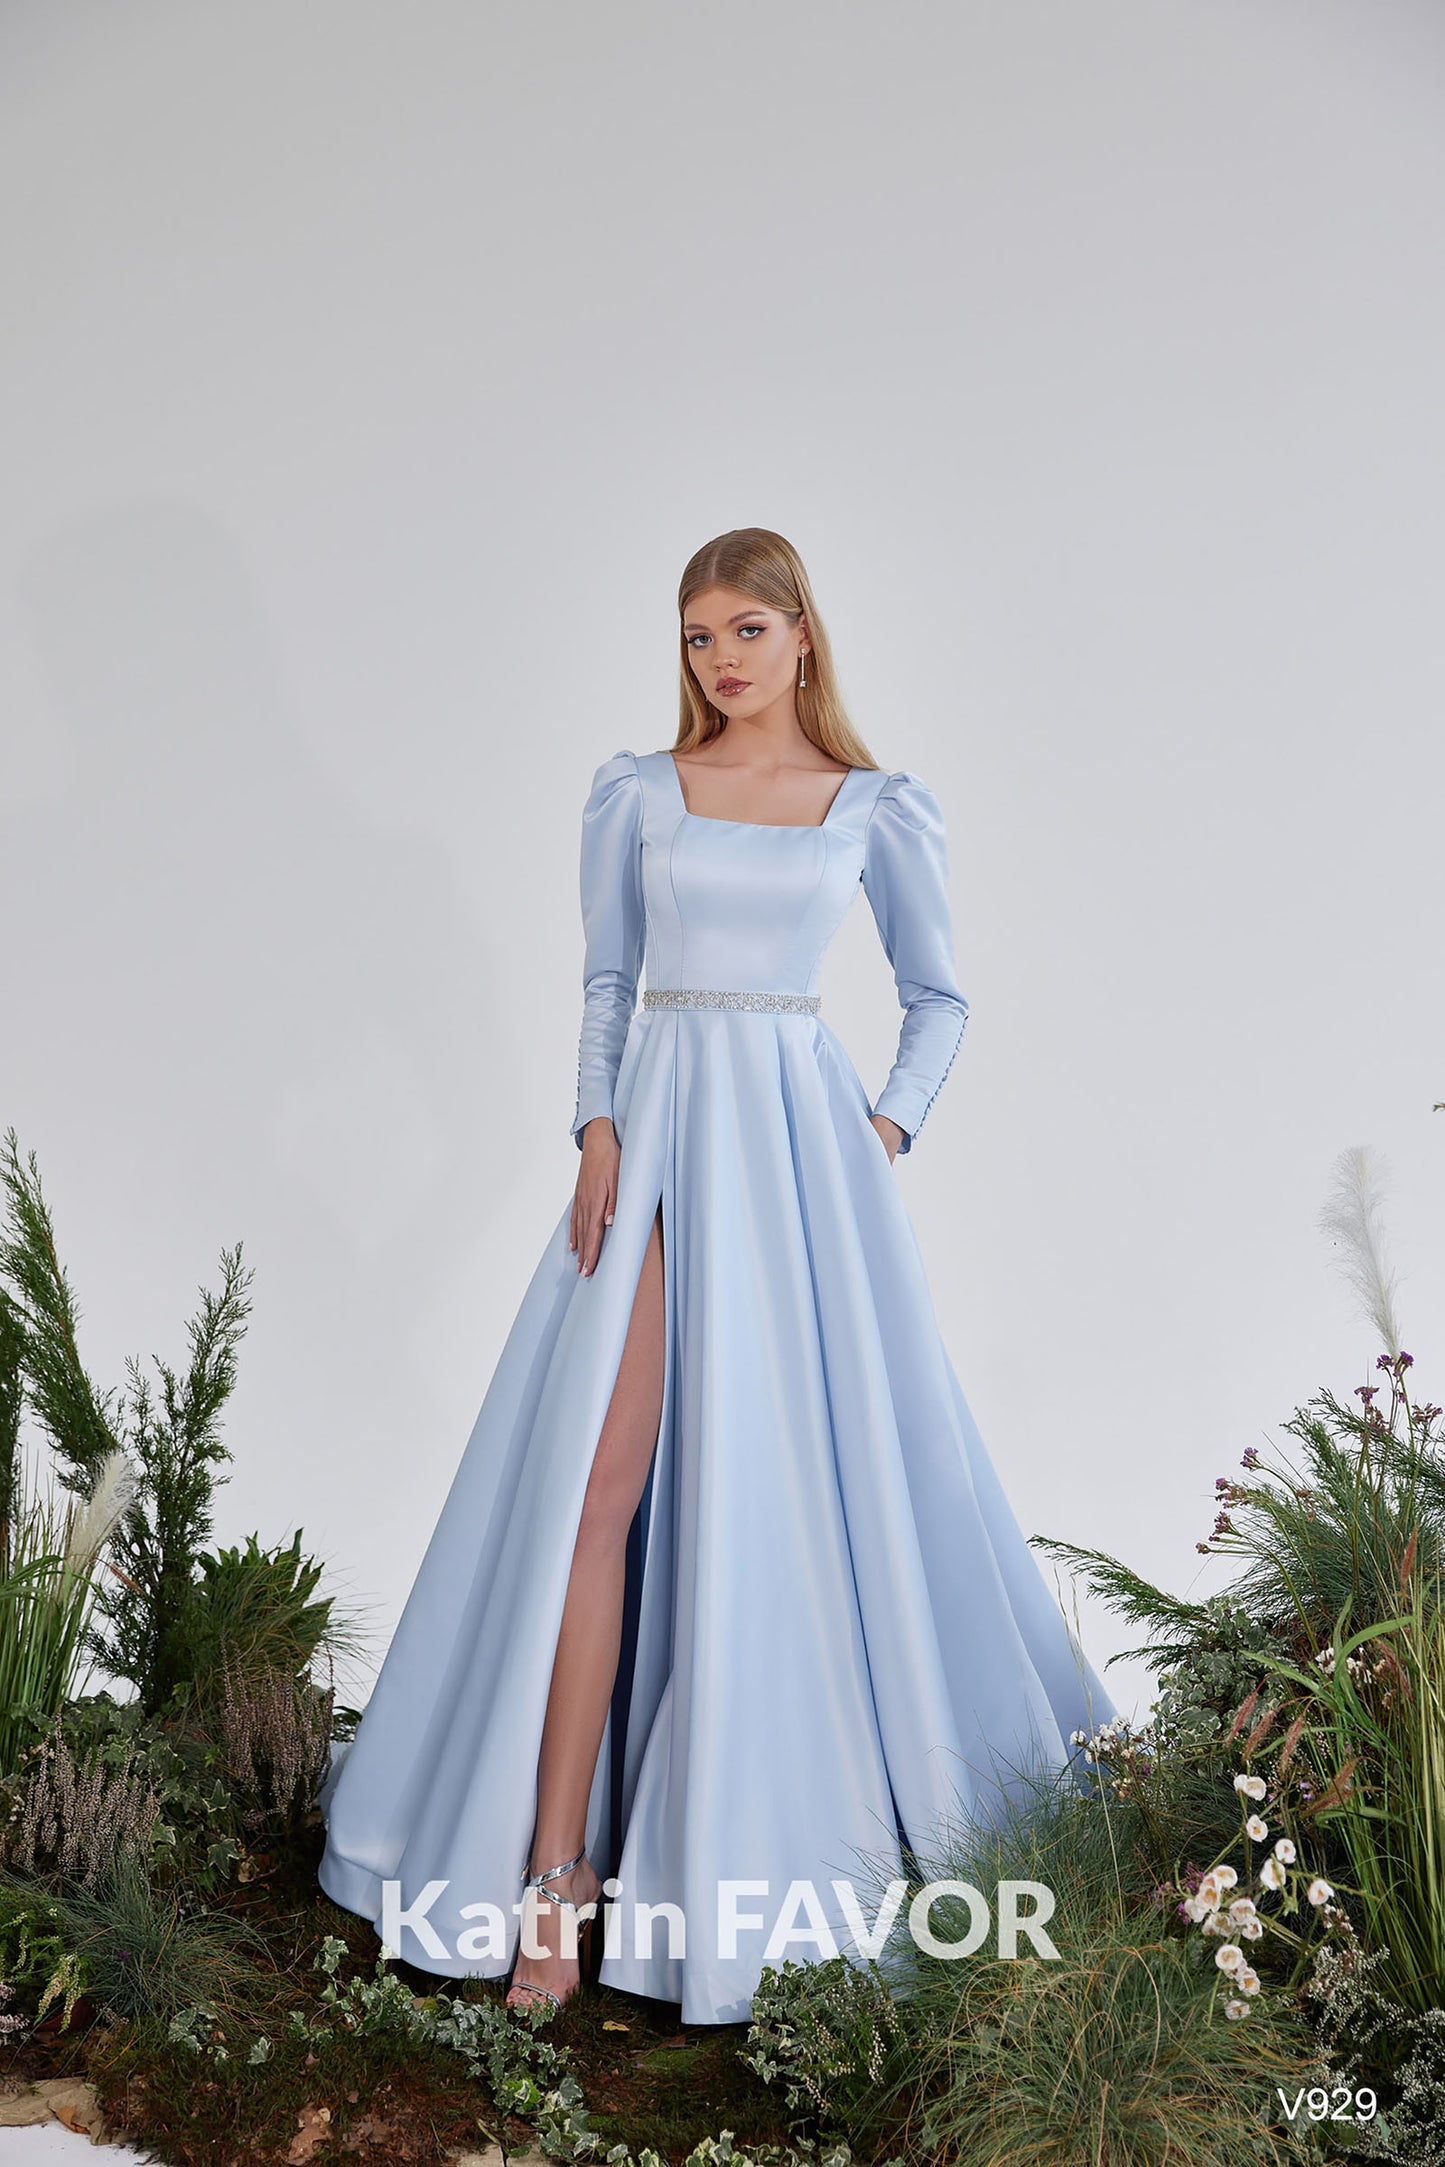 Katrin Favor - Blue satin alternative wedding dress